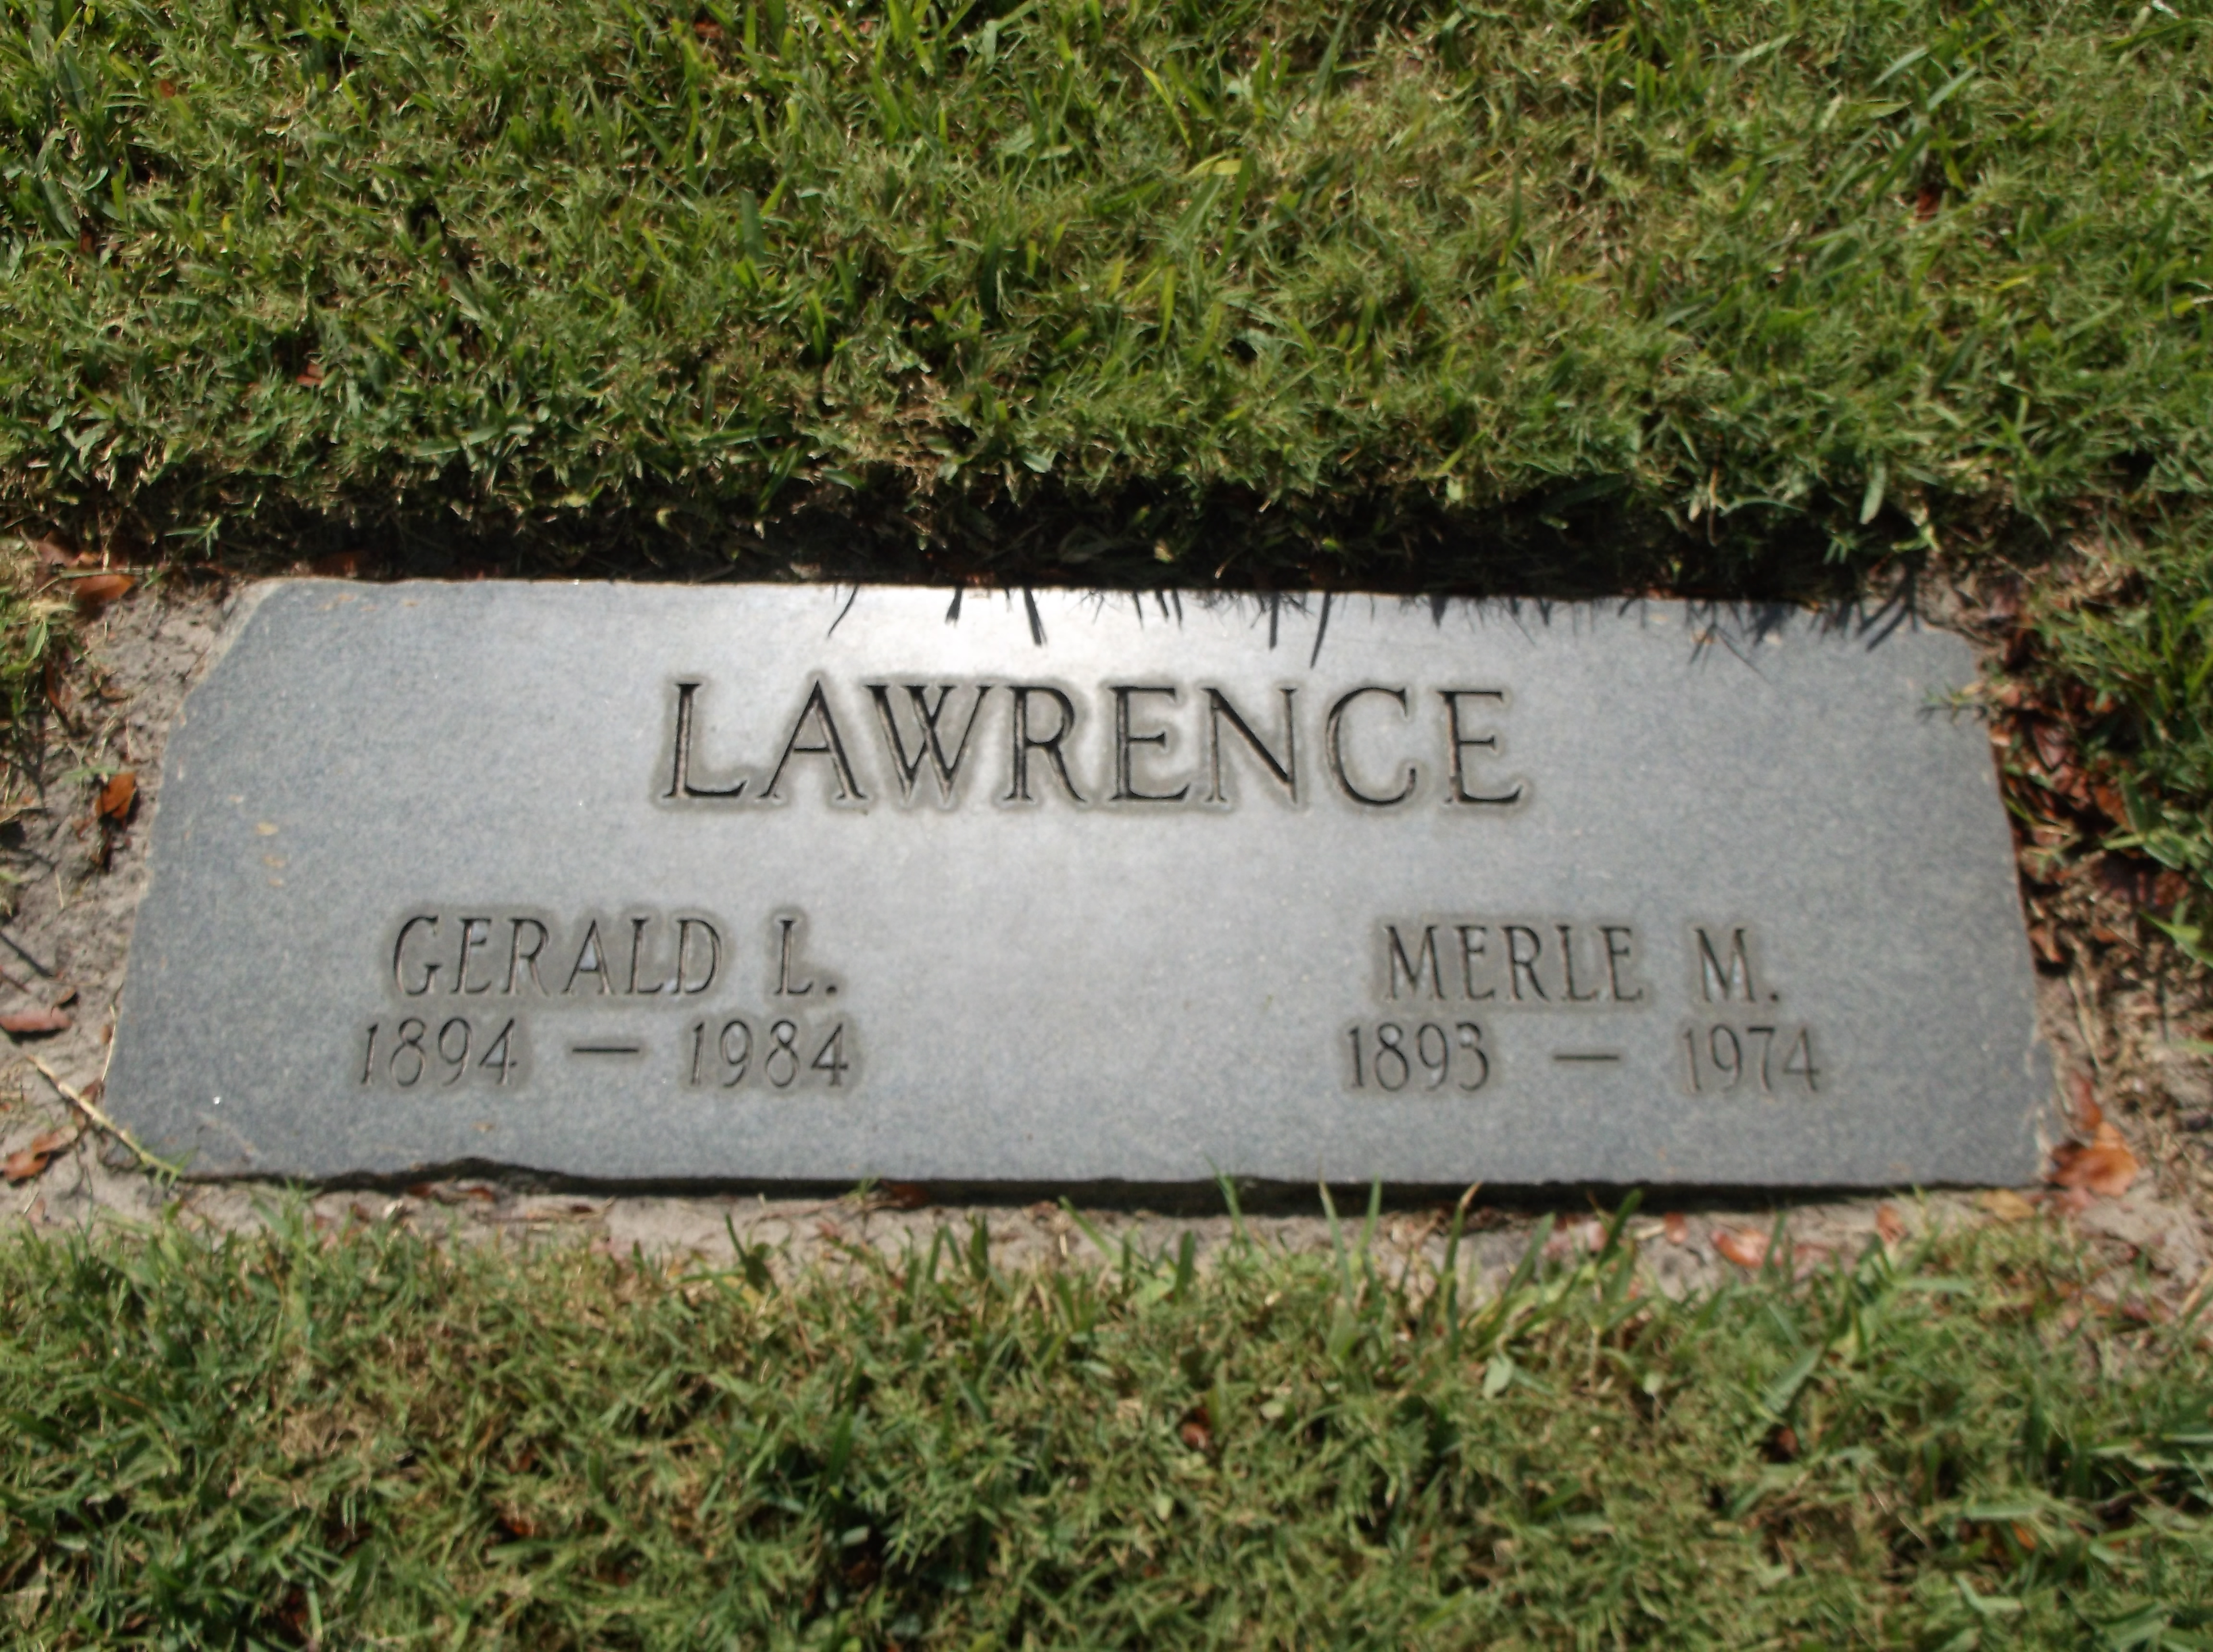 Gerald L Lawrence